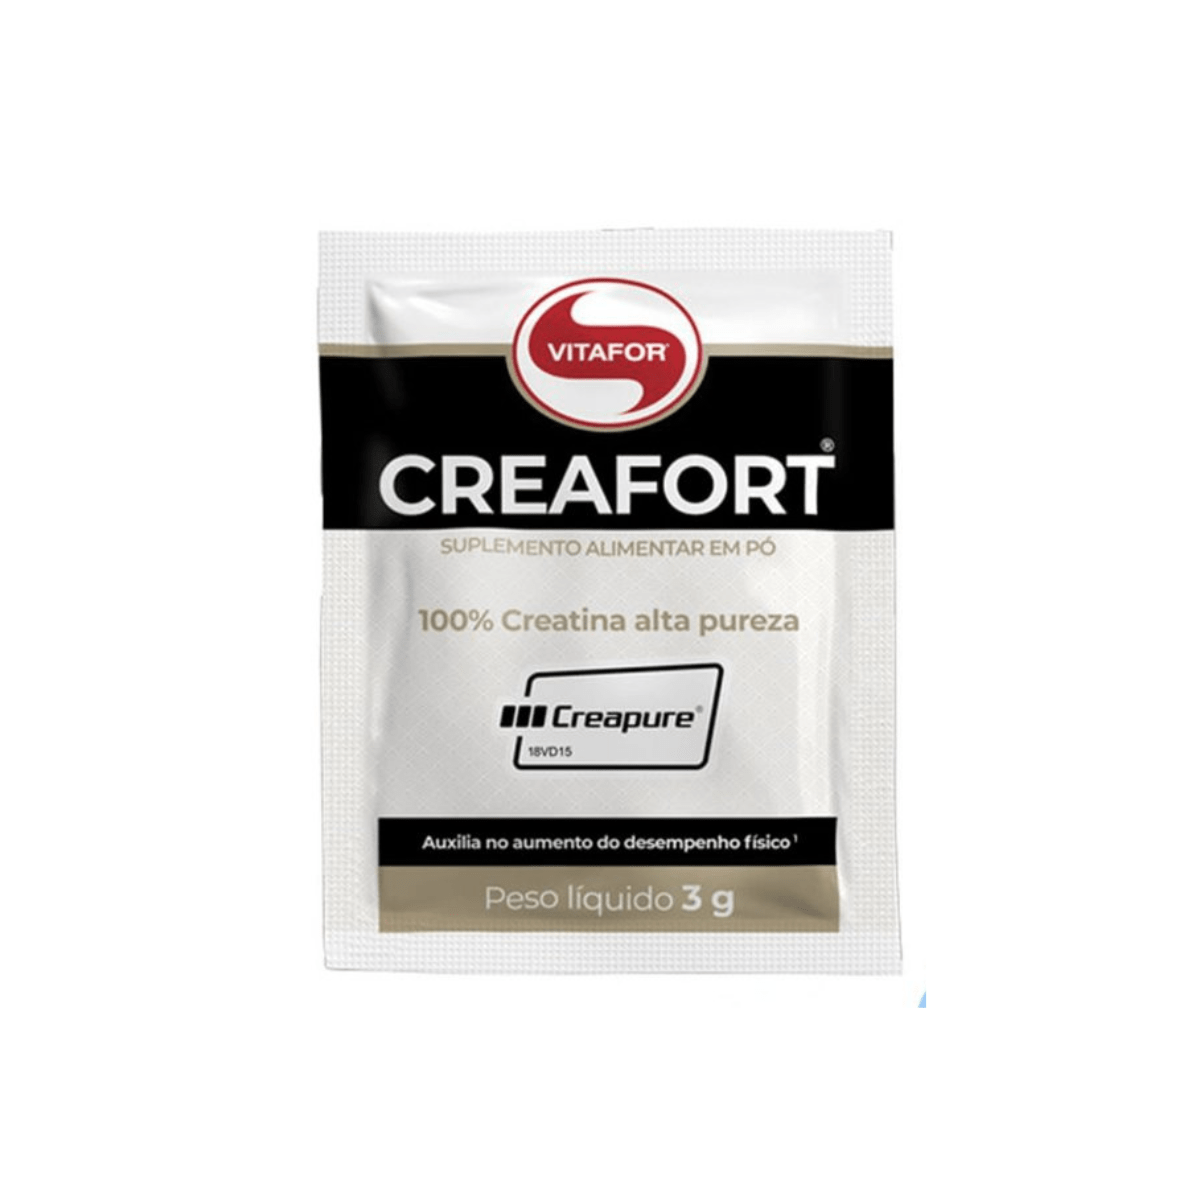 Creafort - Creatina Creapure - 30 sachês 3g - Vitafor